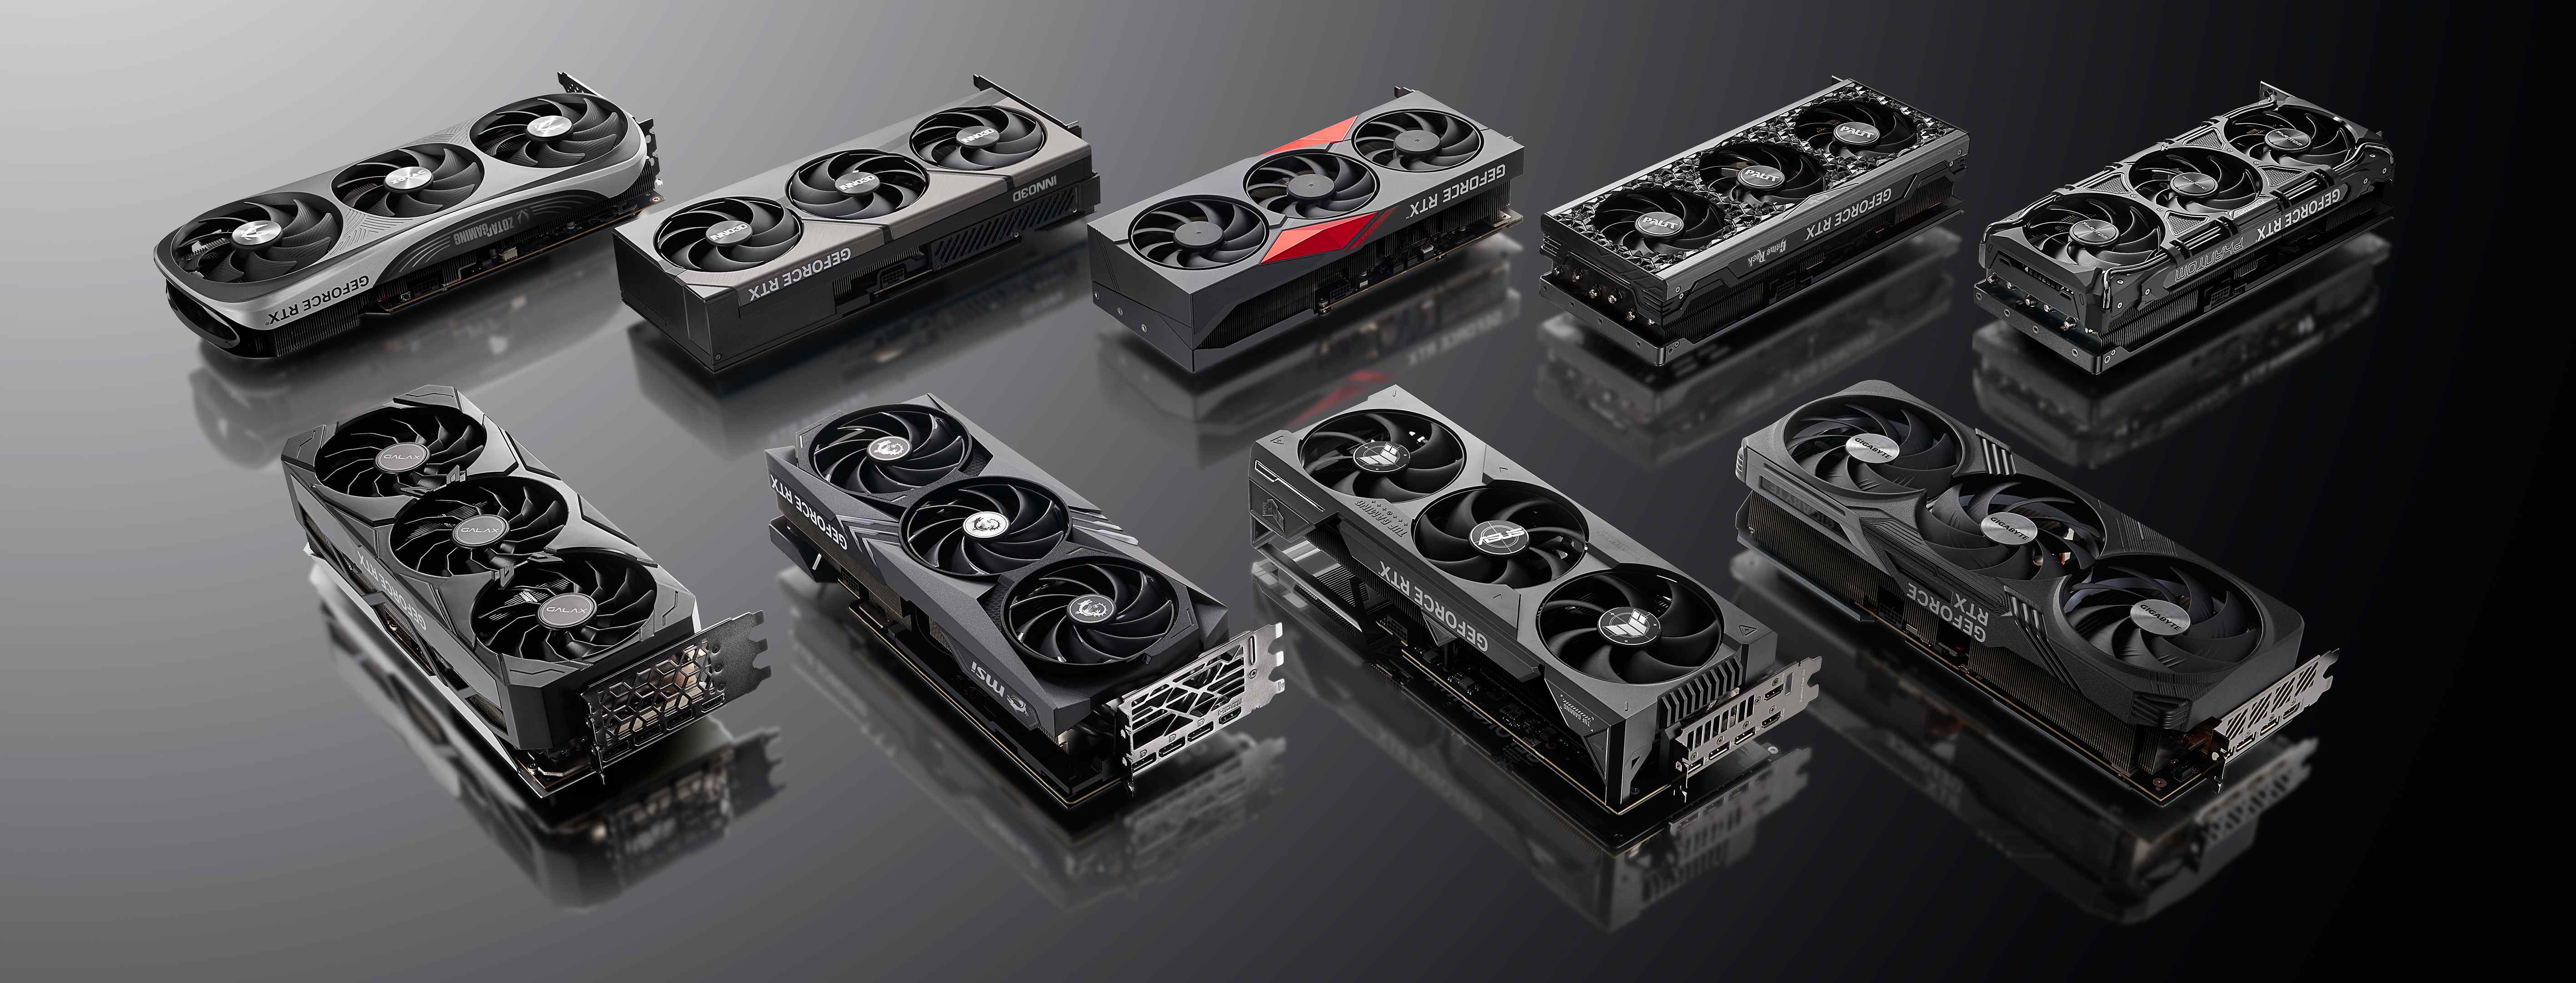 GPU Nvidia série 40 de fournisseurs tiers